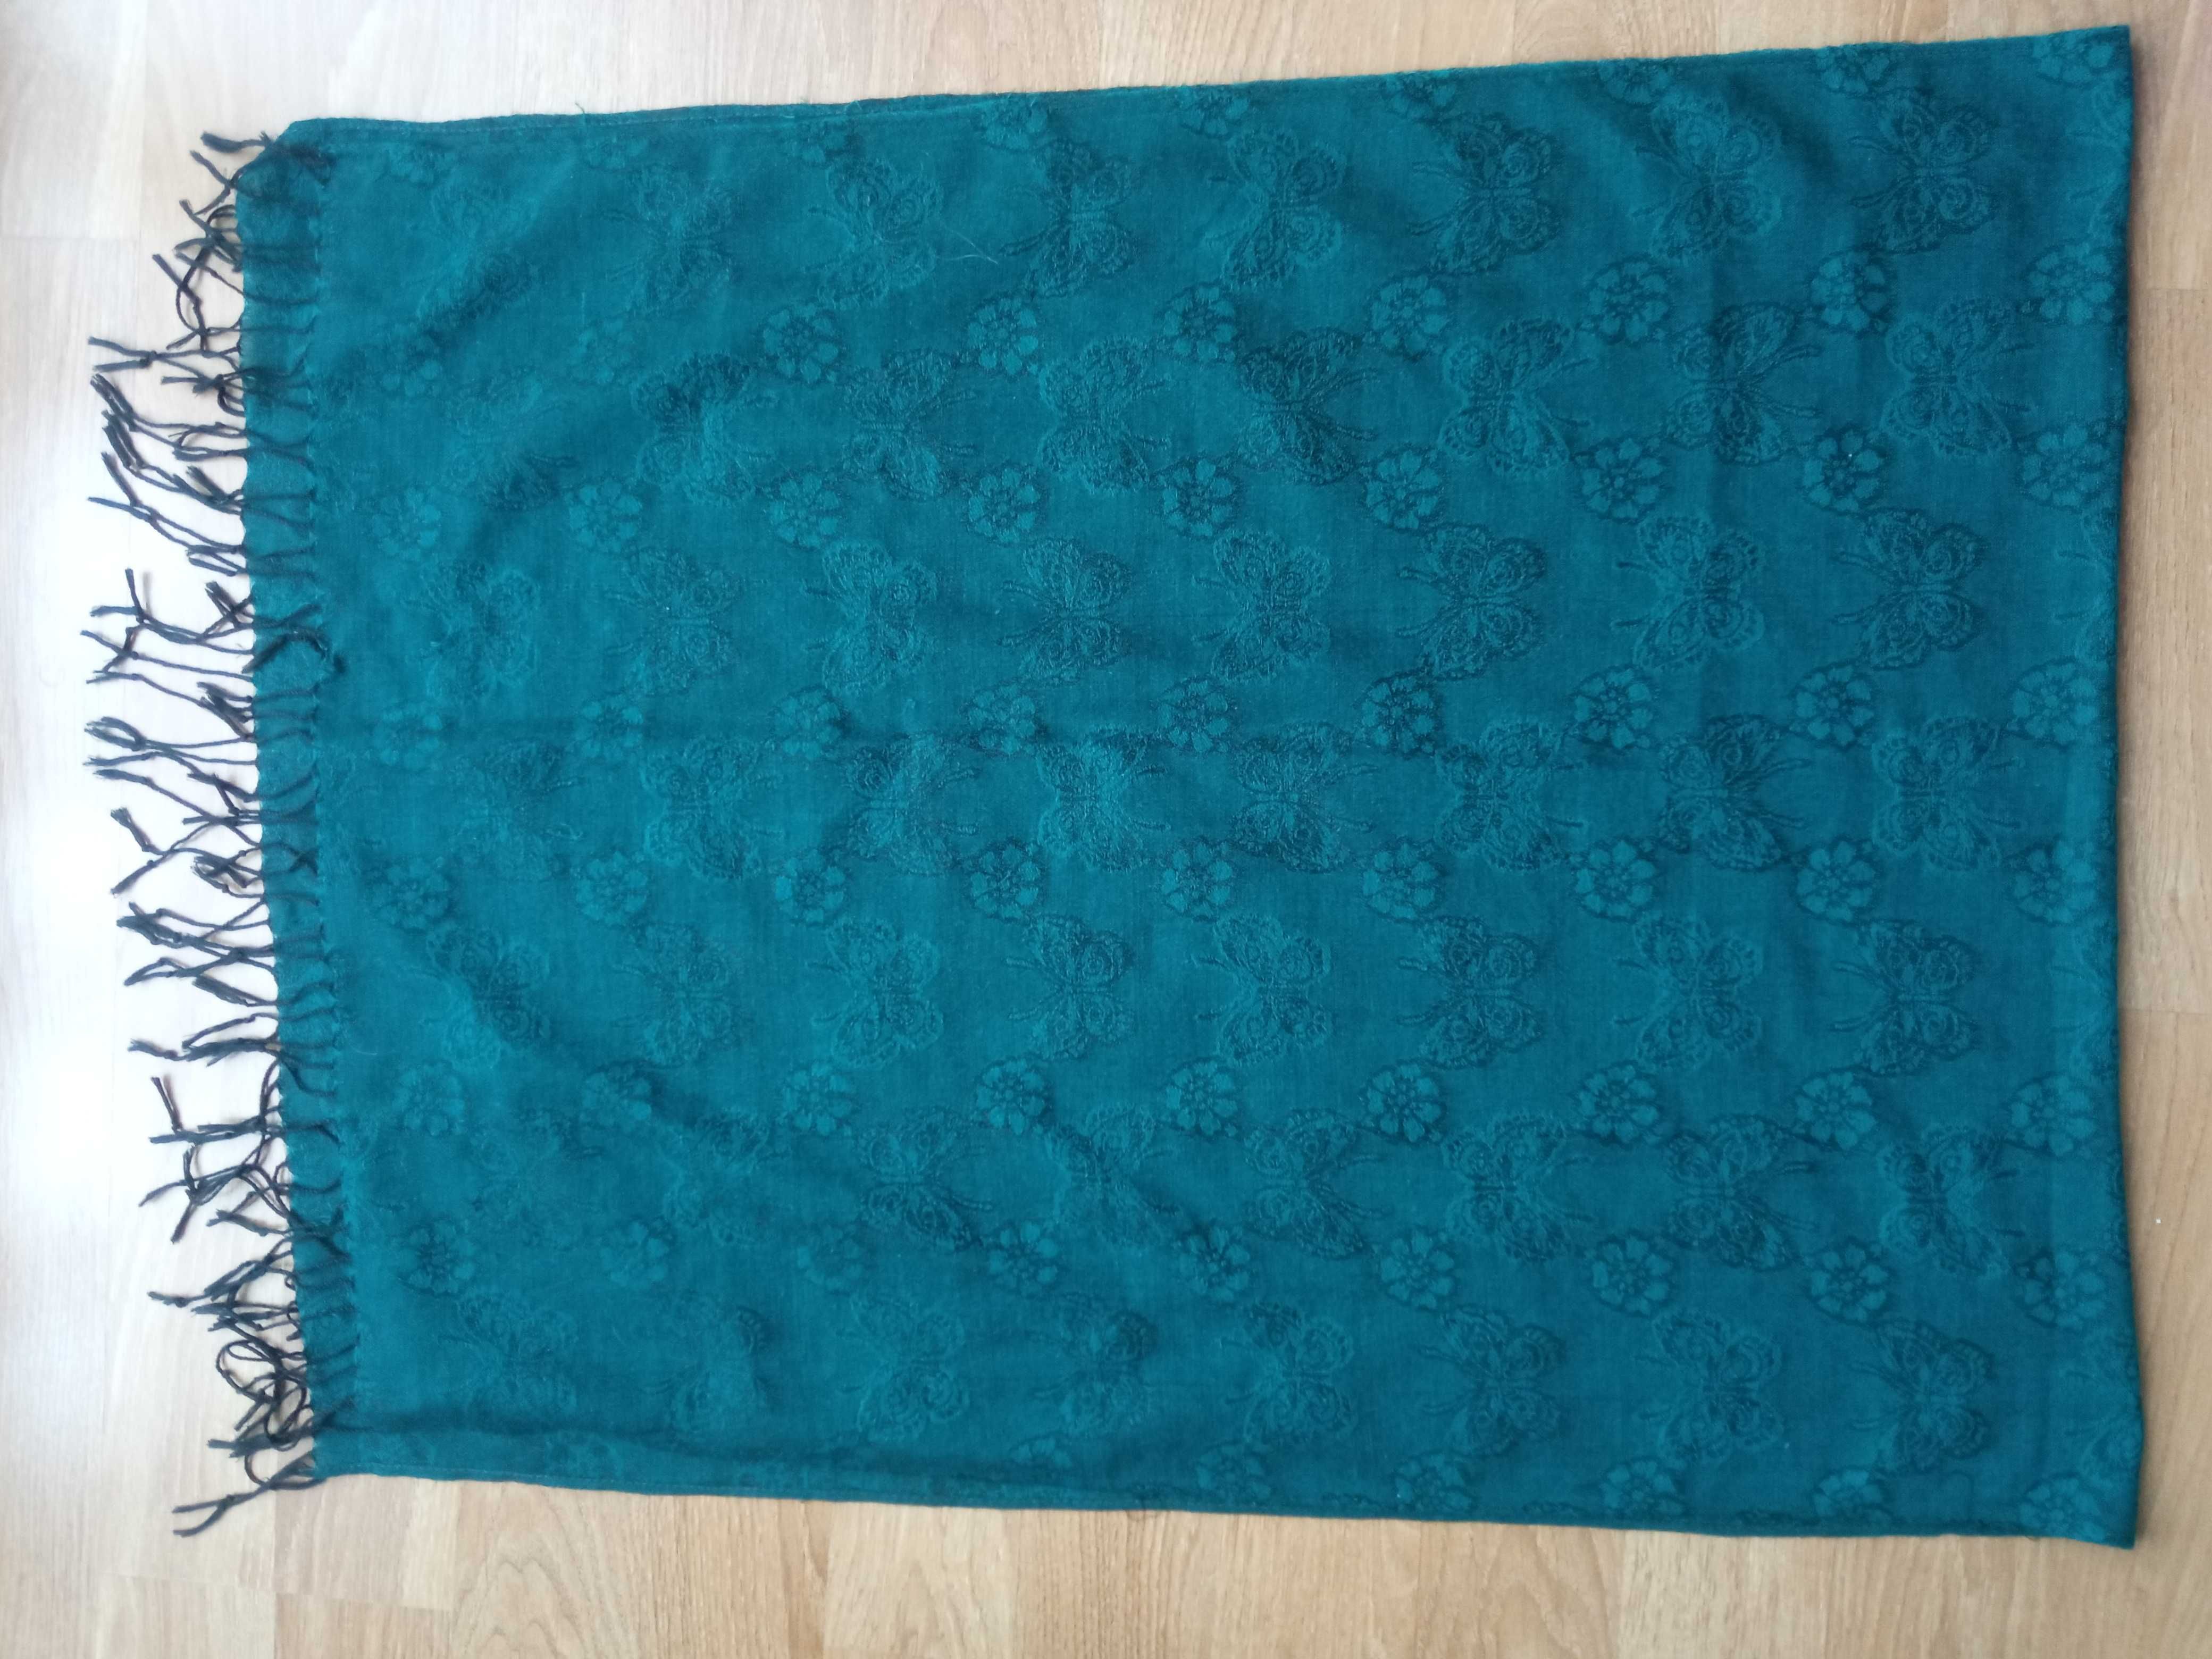 Duża chusta turkusowa elegancka szal turkusowy z frędzlami 180 x 70 cm